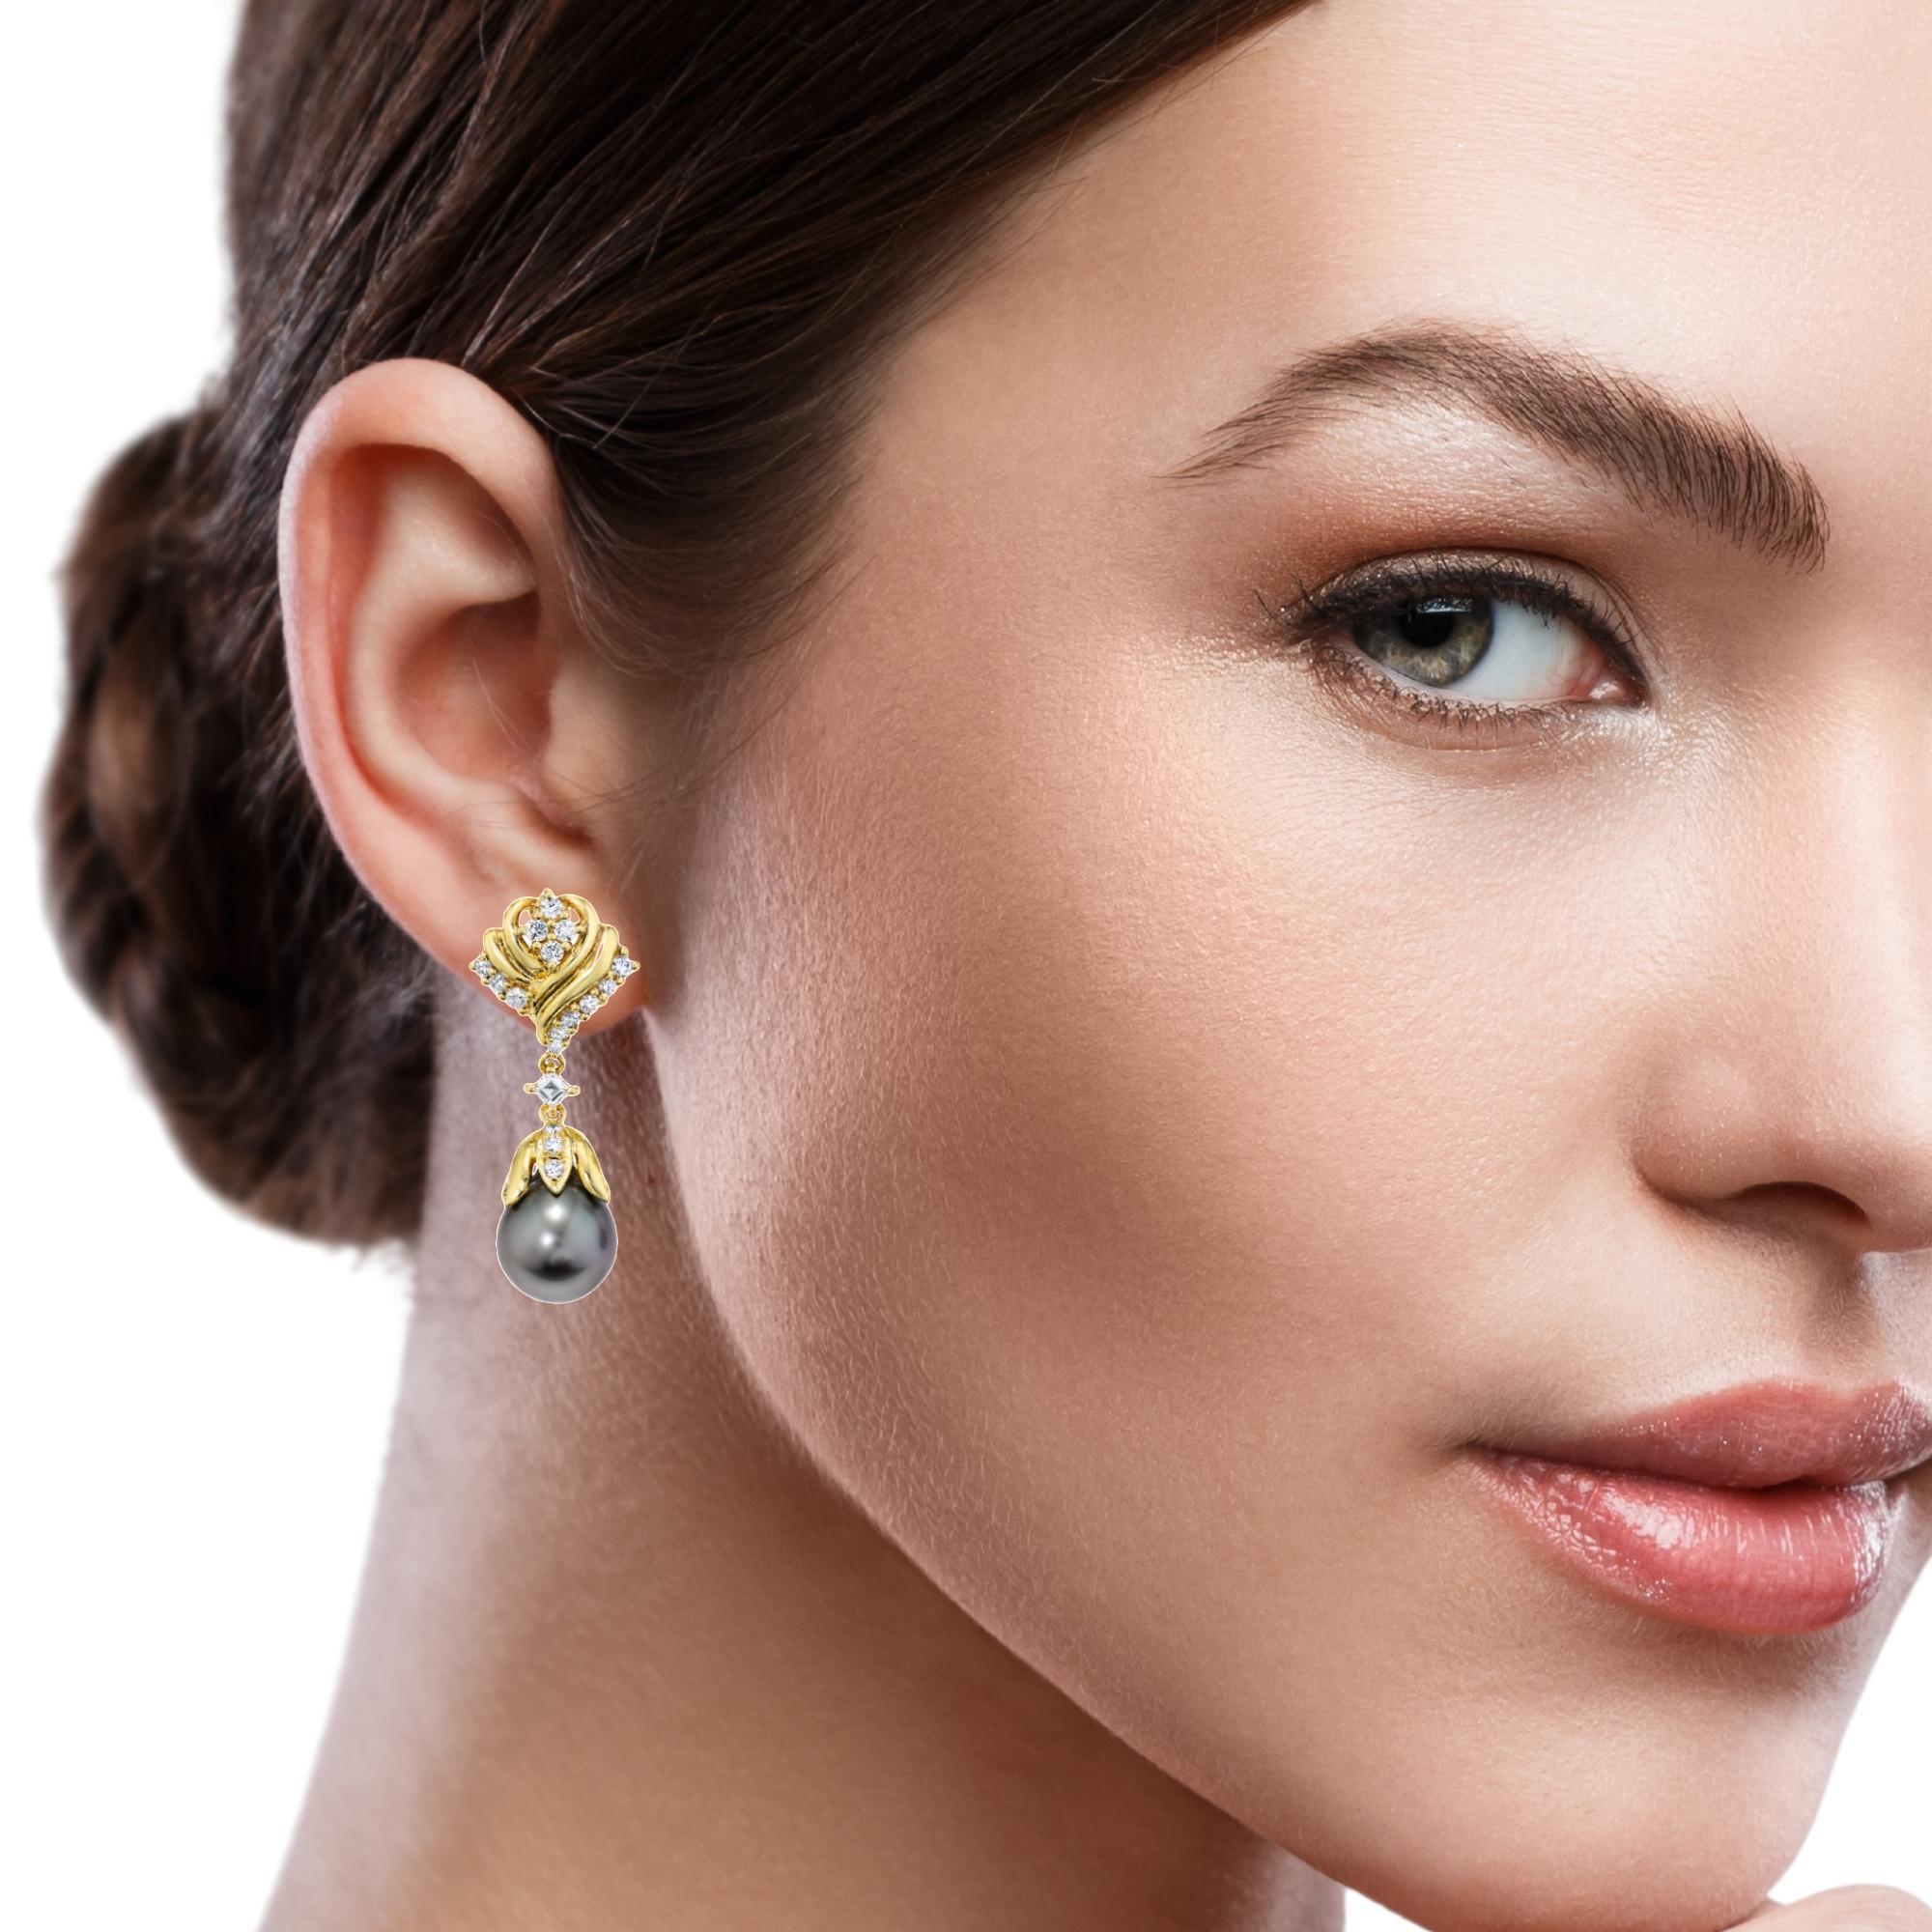  11.25mm South Sea Pearl and Diamond Dangle Earrings in 18k Yellow Gold  6